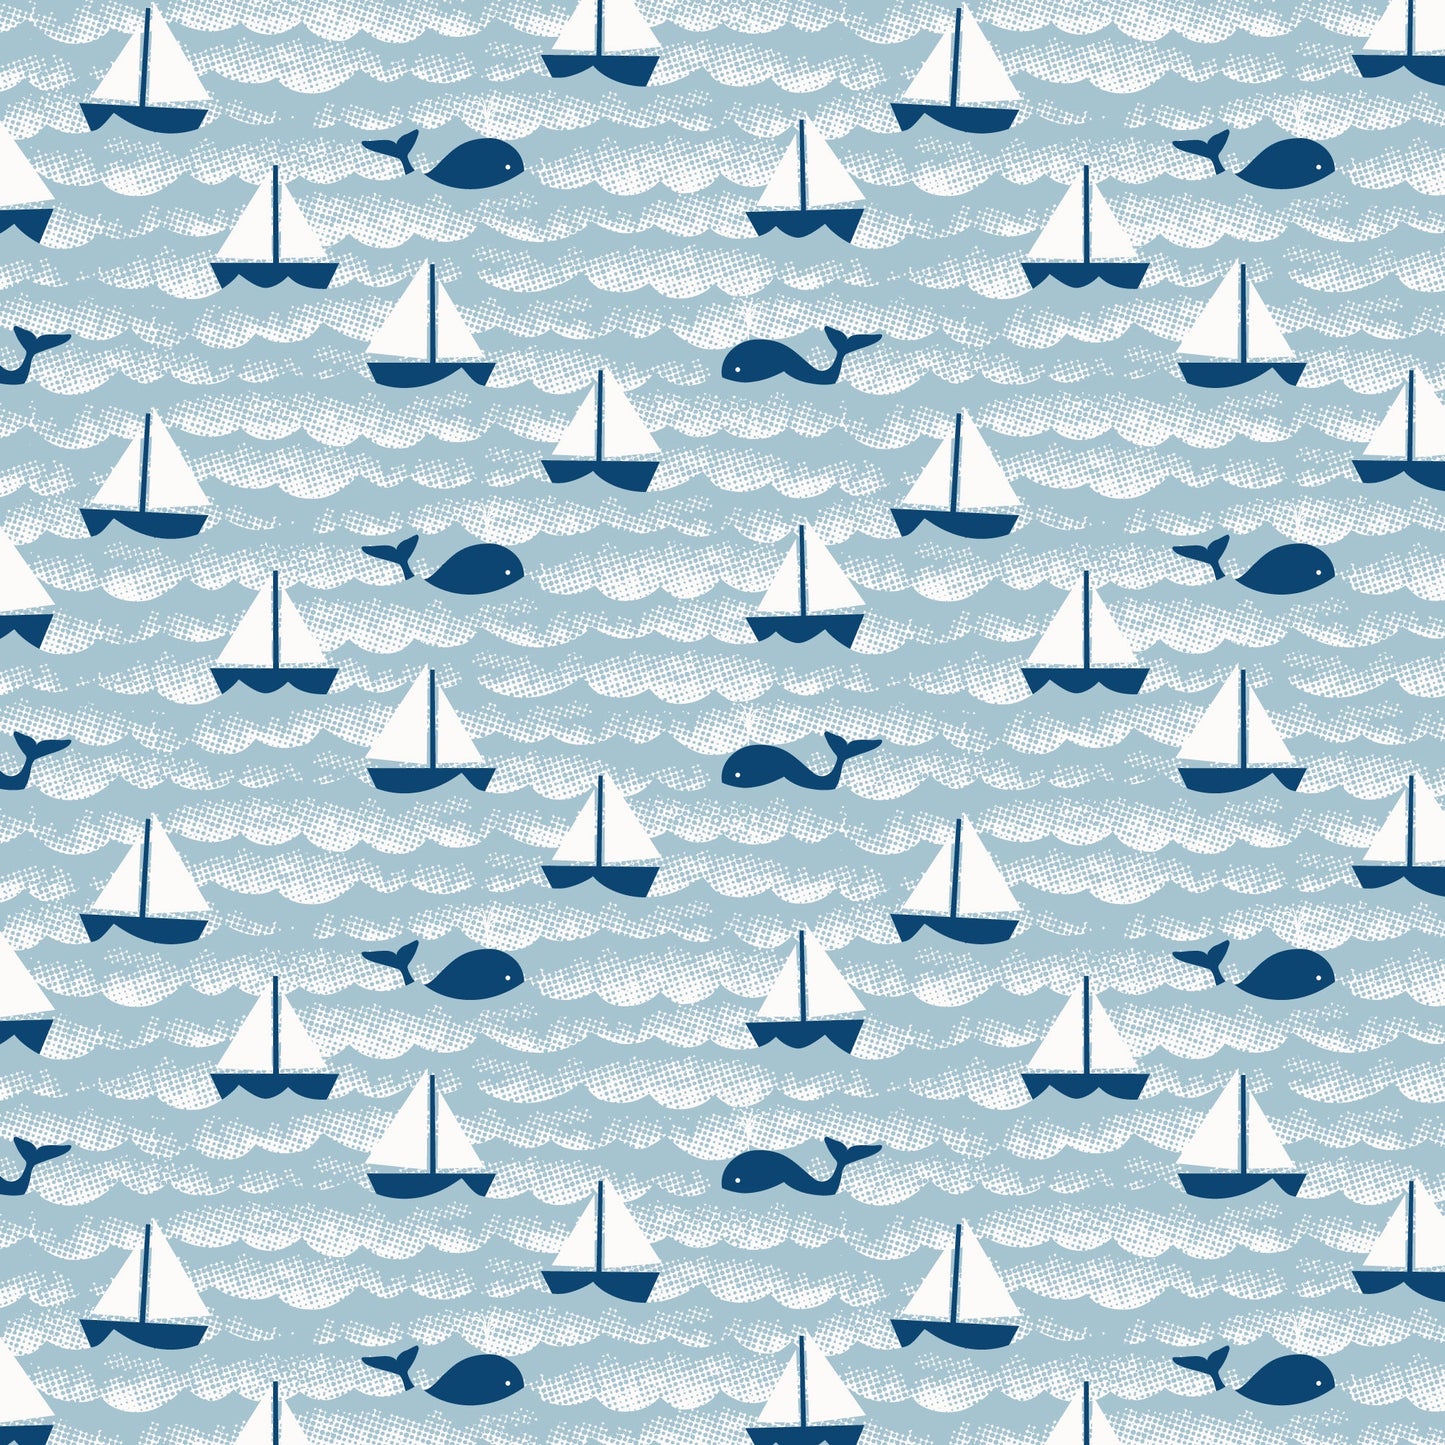 French Terry Shorts - Sailboats Ocean Blue & Navy